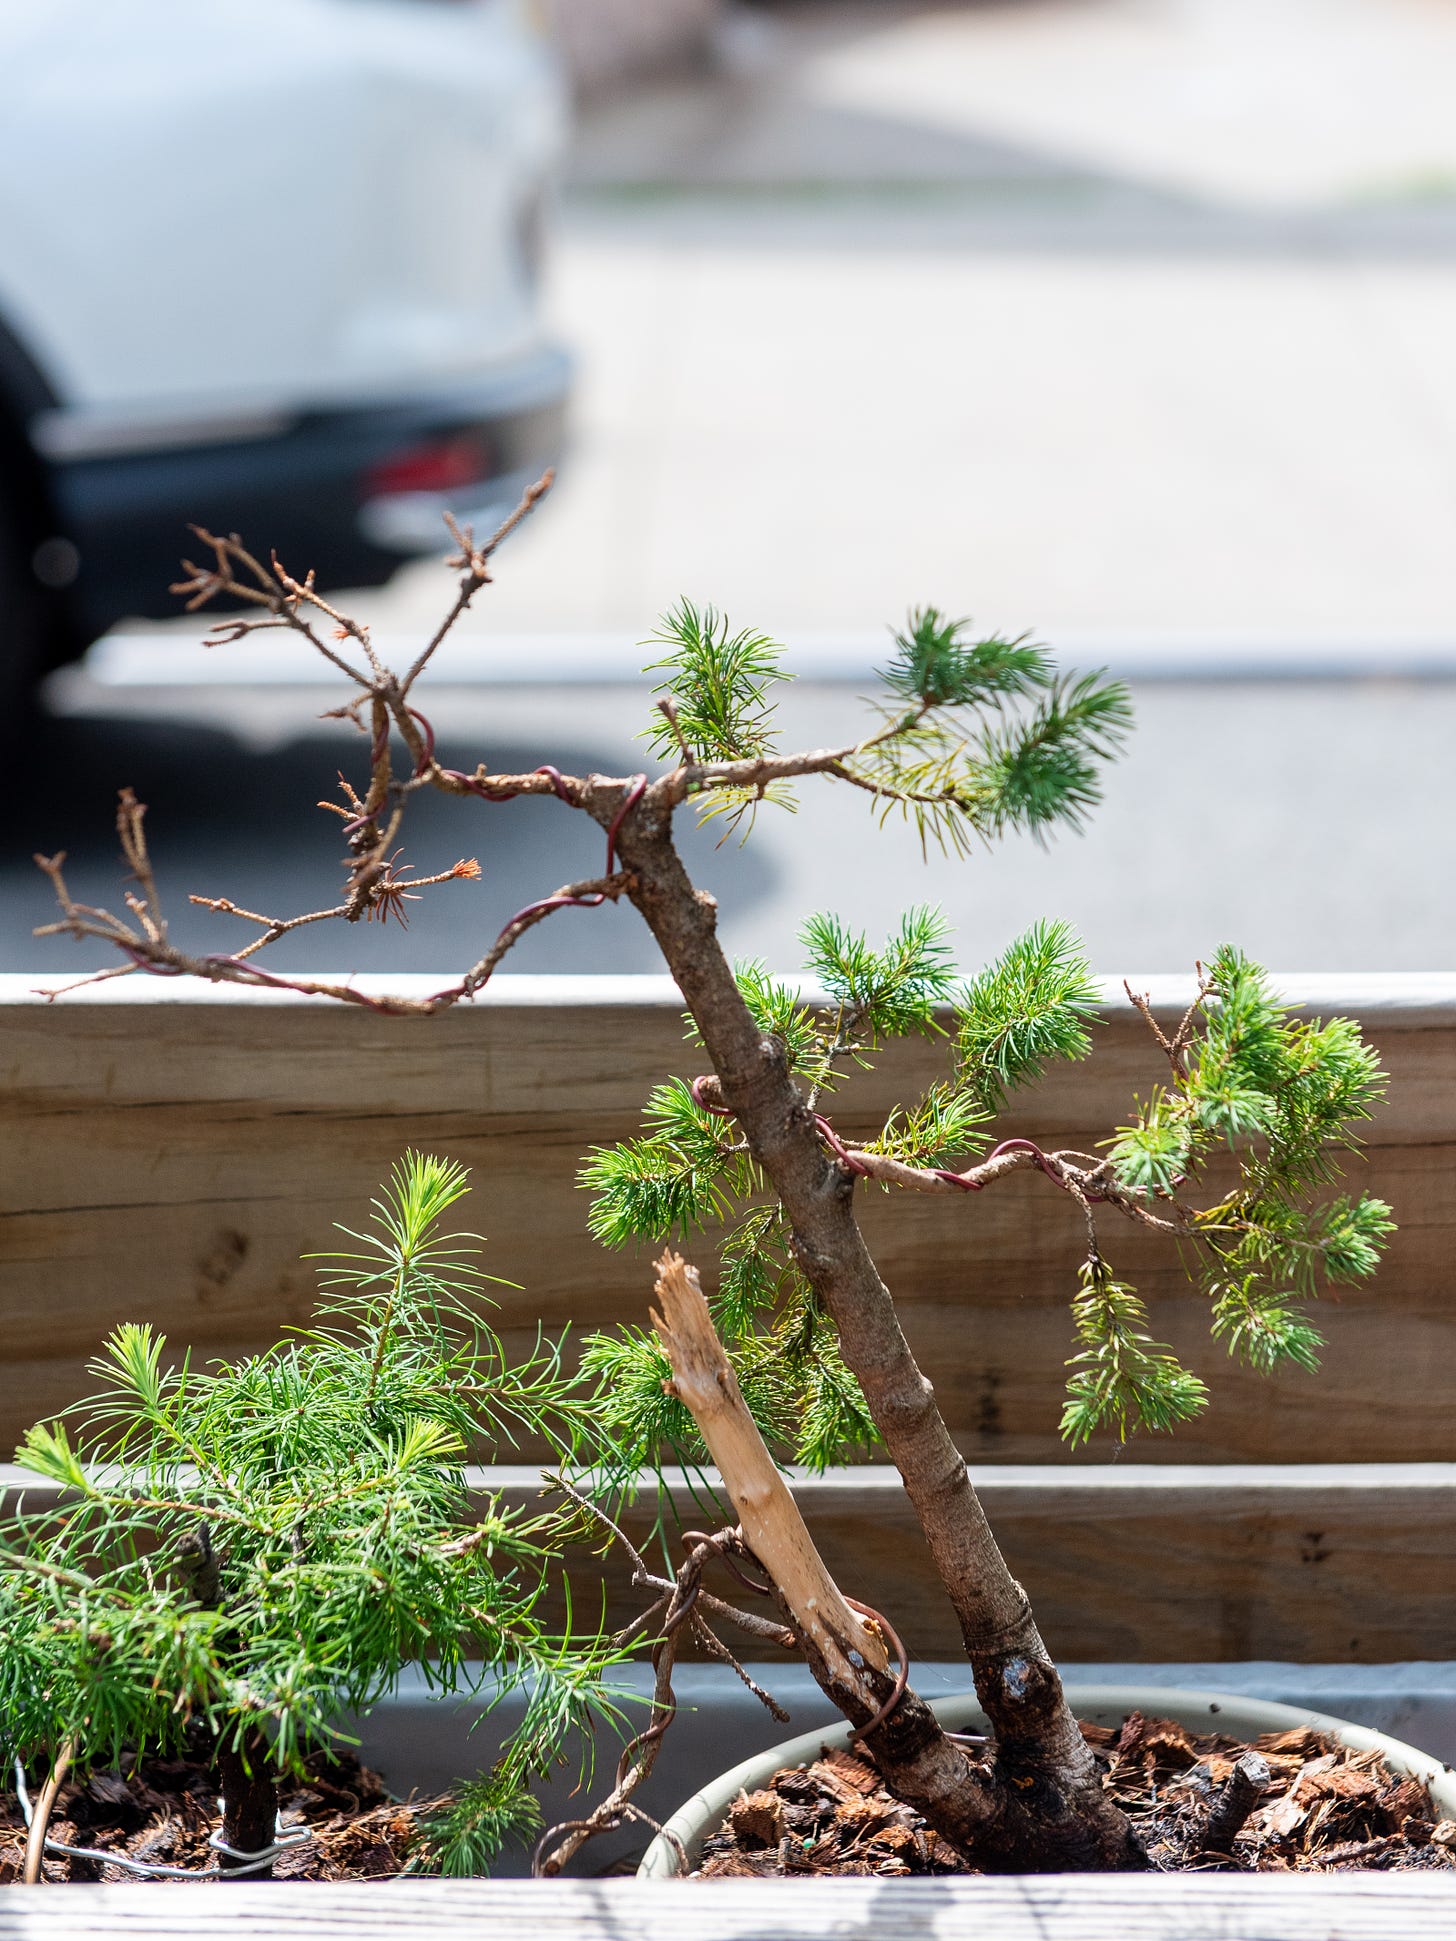 ID: Dwarf alberta spruce bonsai, looking rough